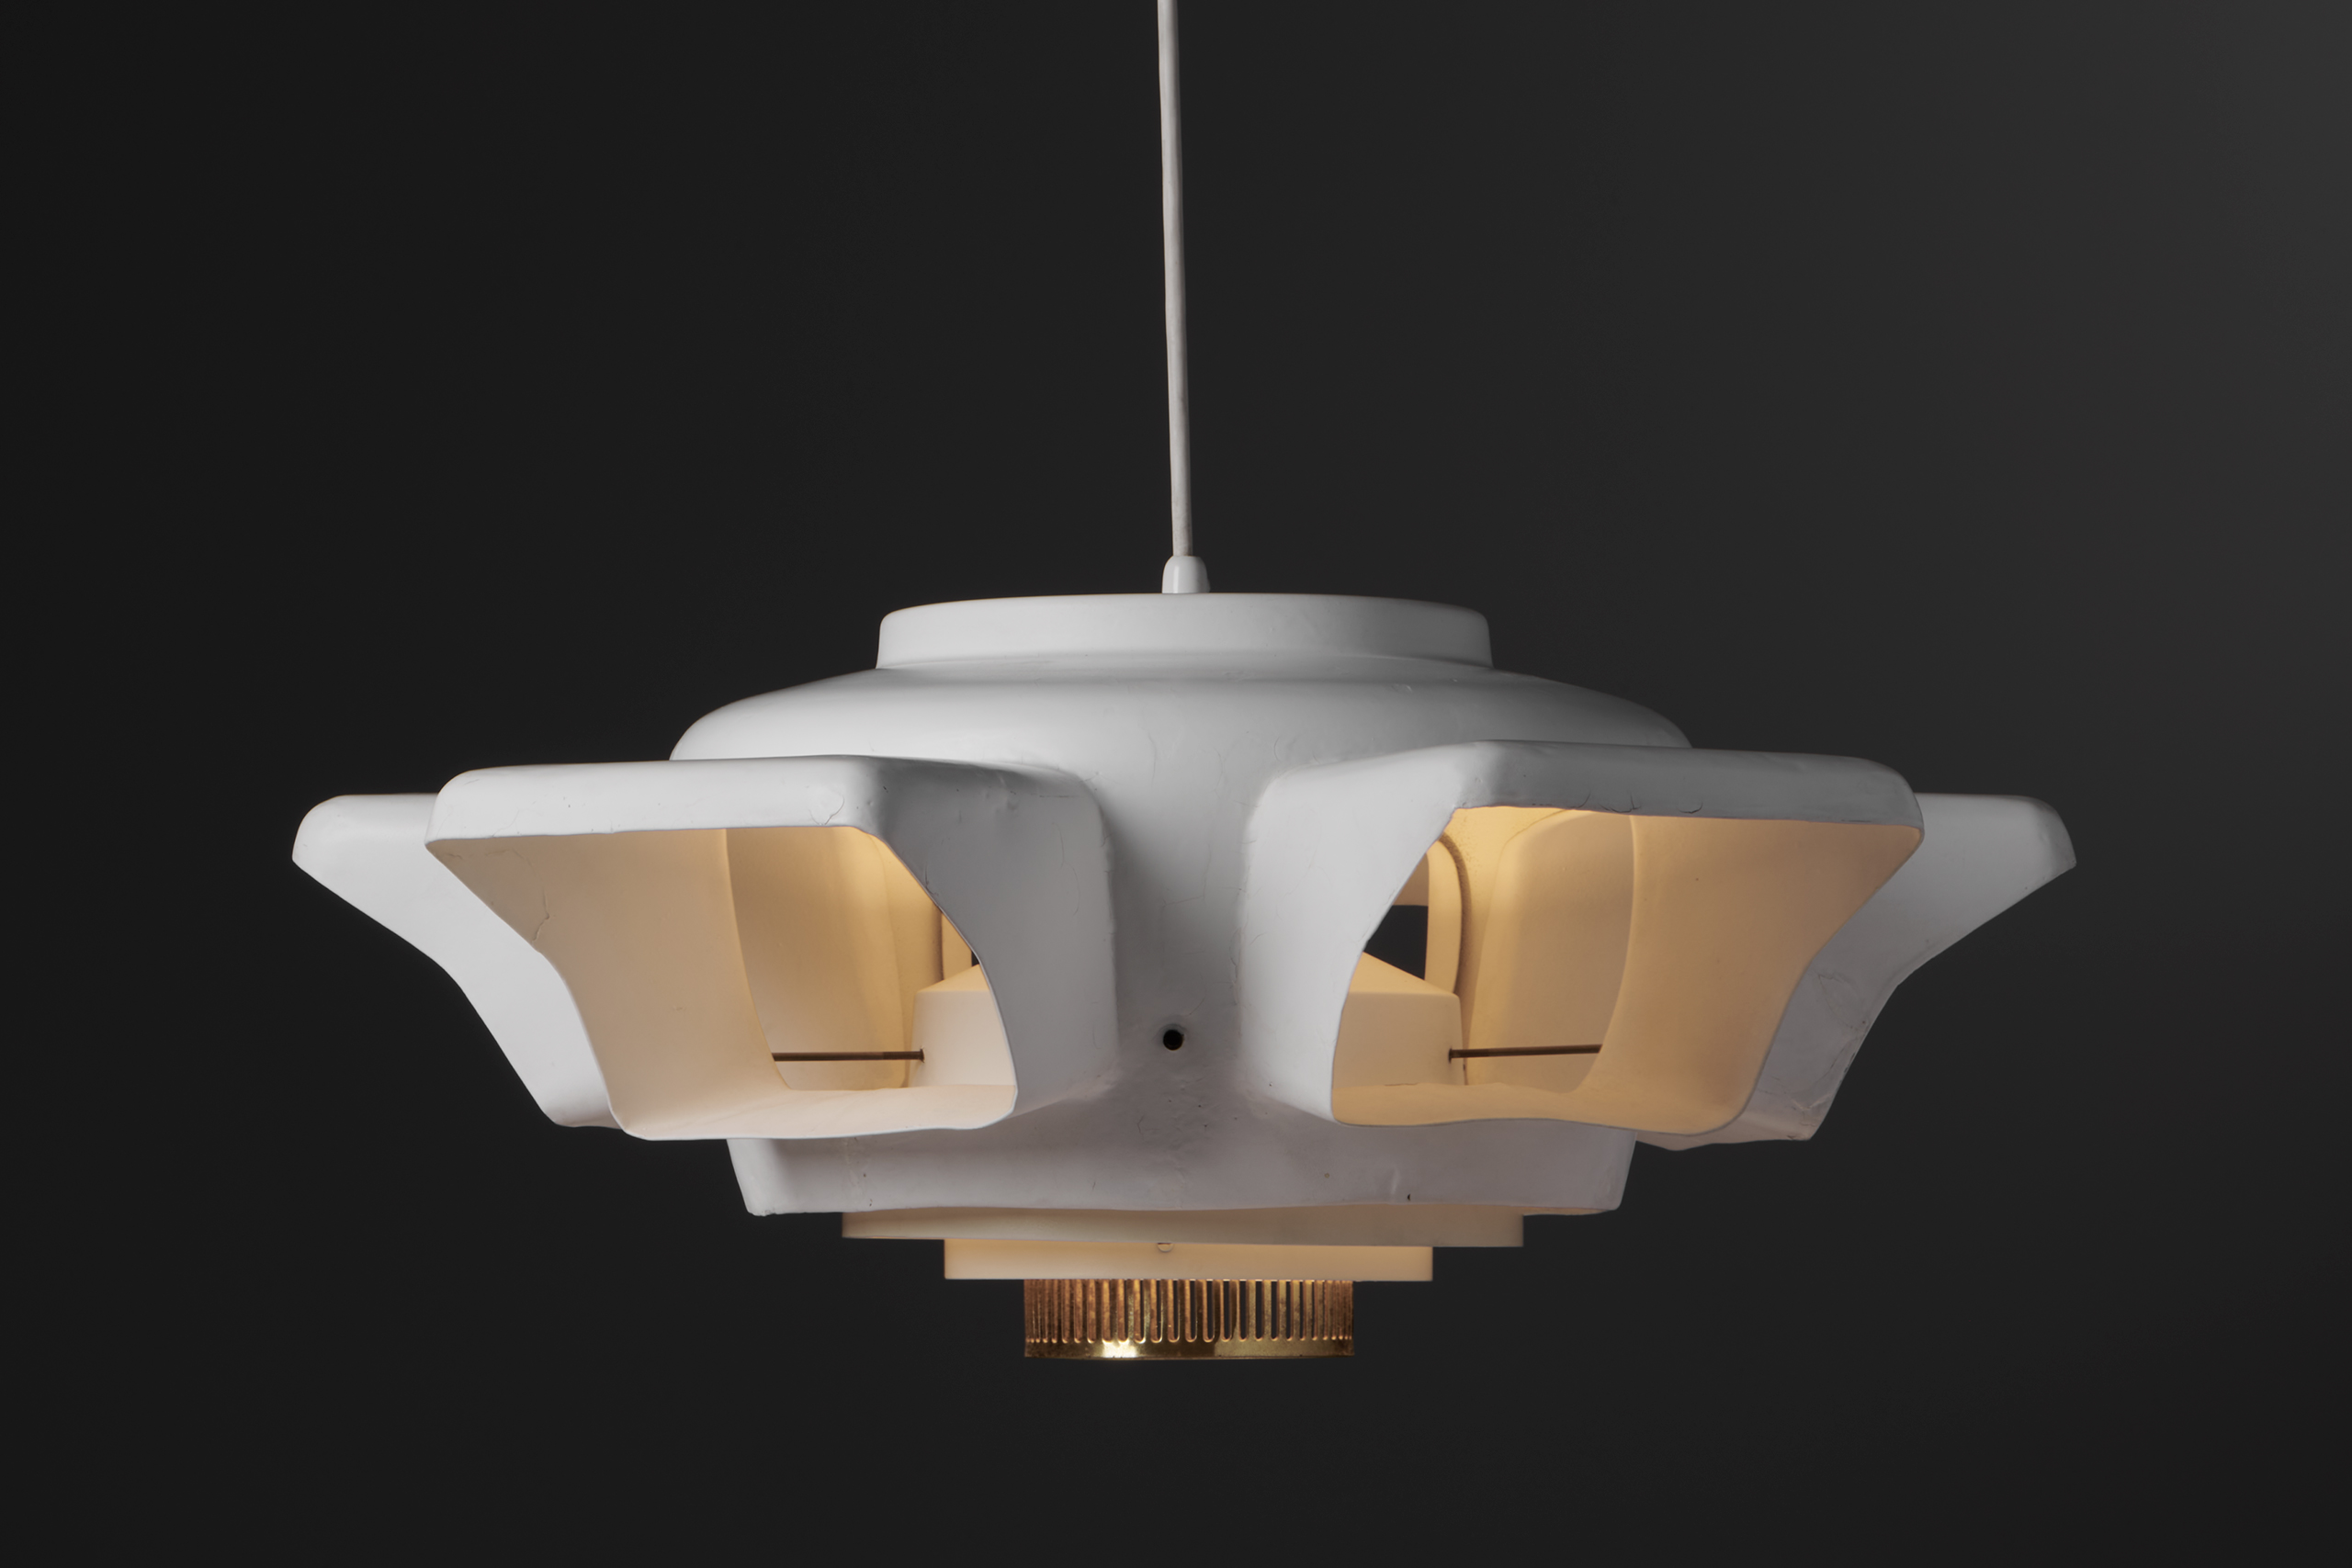 Alvar Aalto – Prototype Ceiling Lamp - Jackson Design